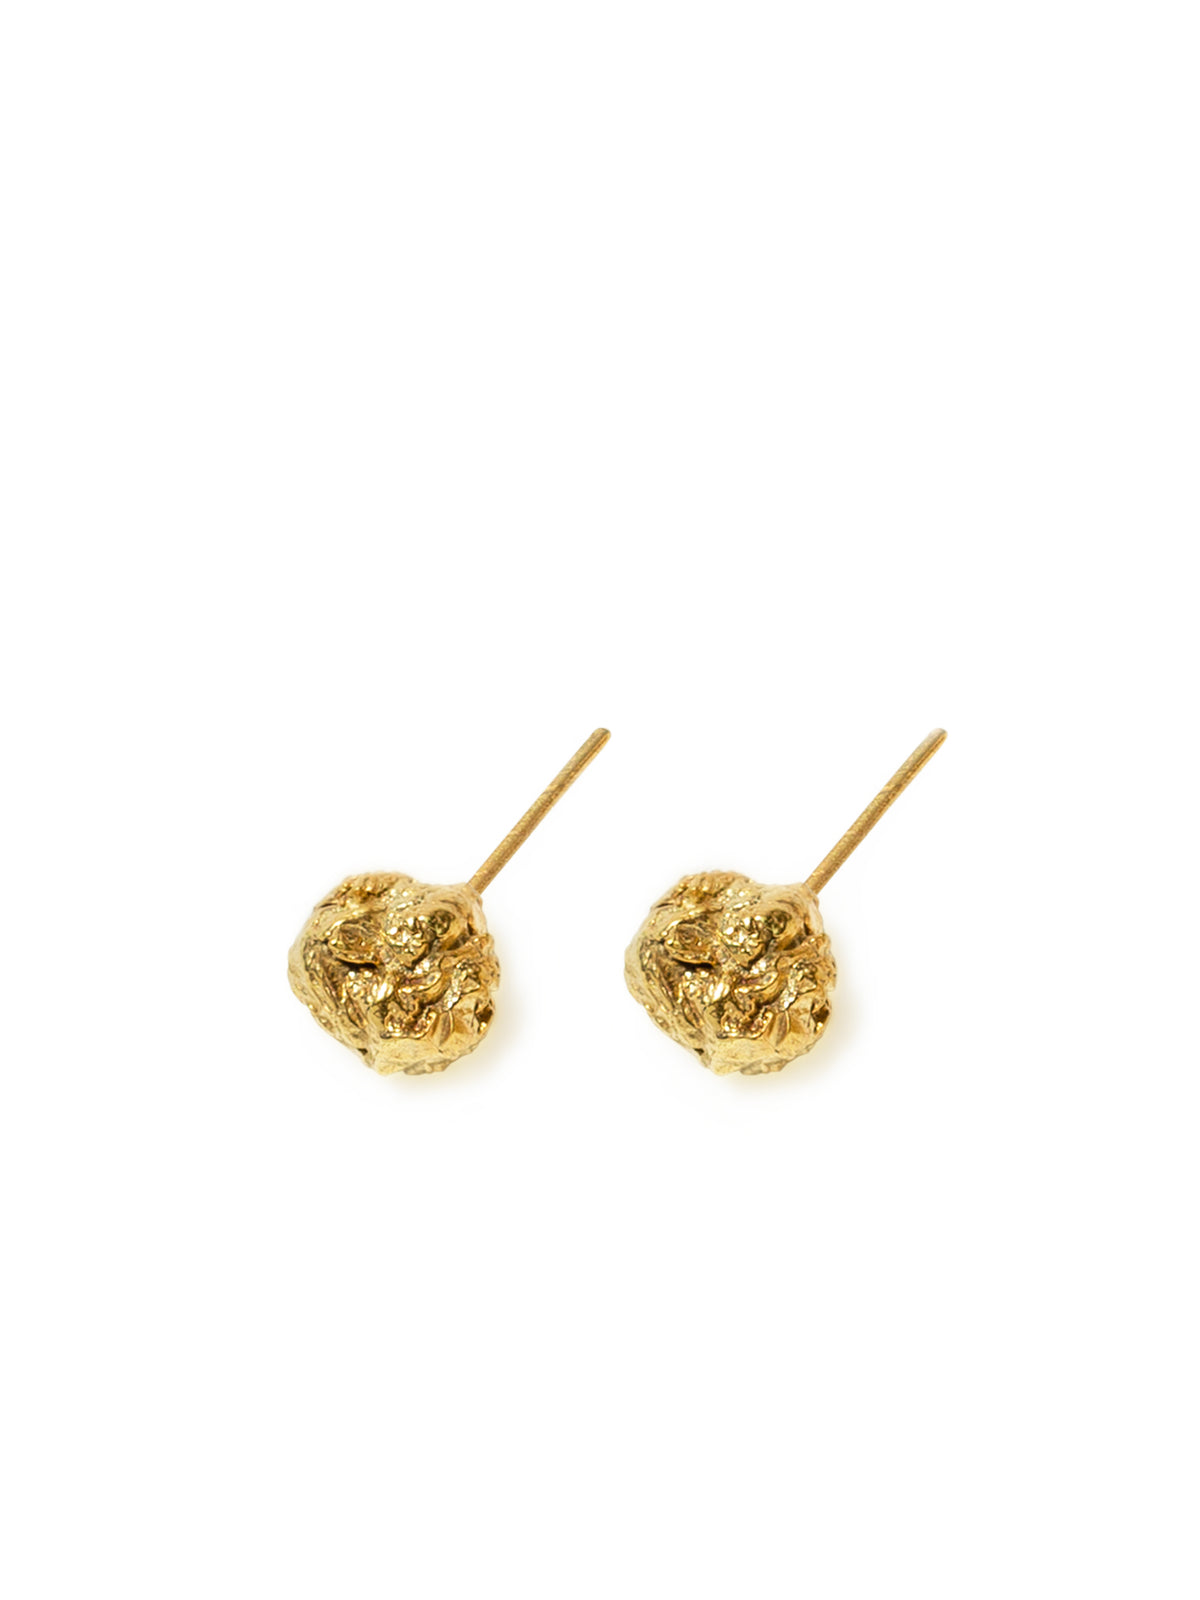 Archaic Stud Earrings Gold